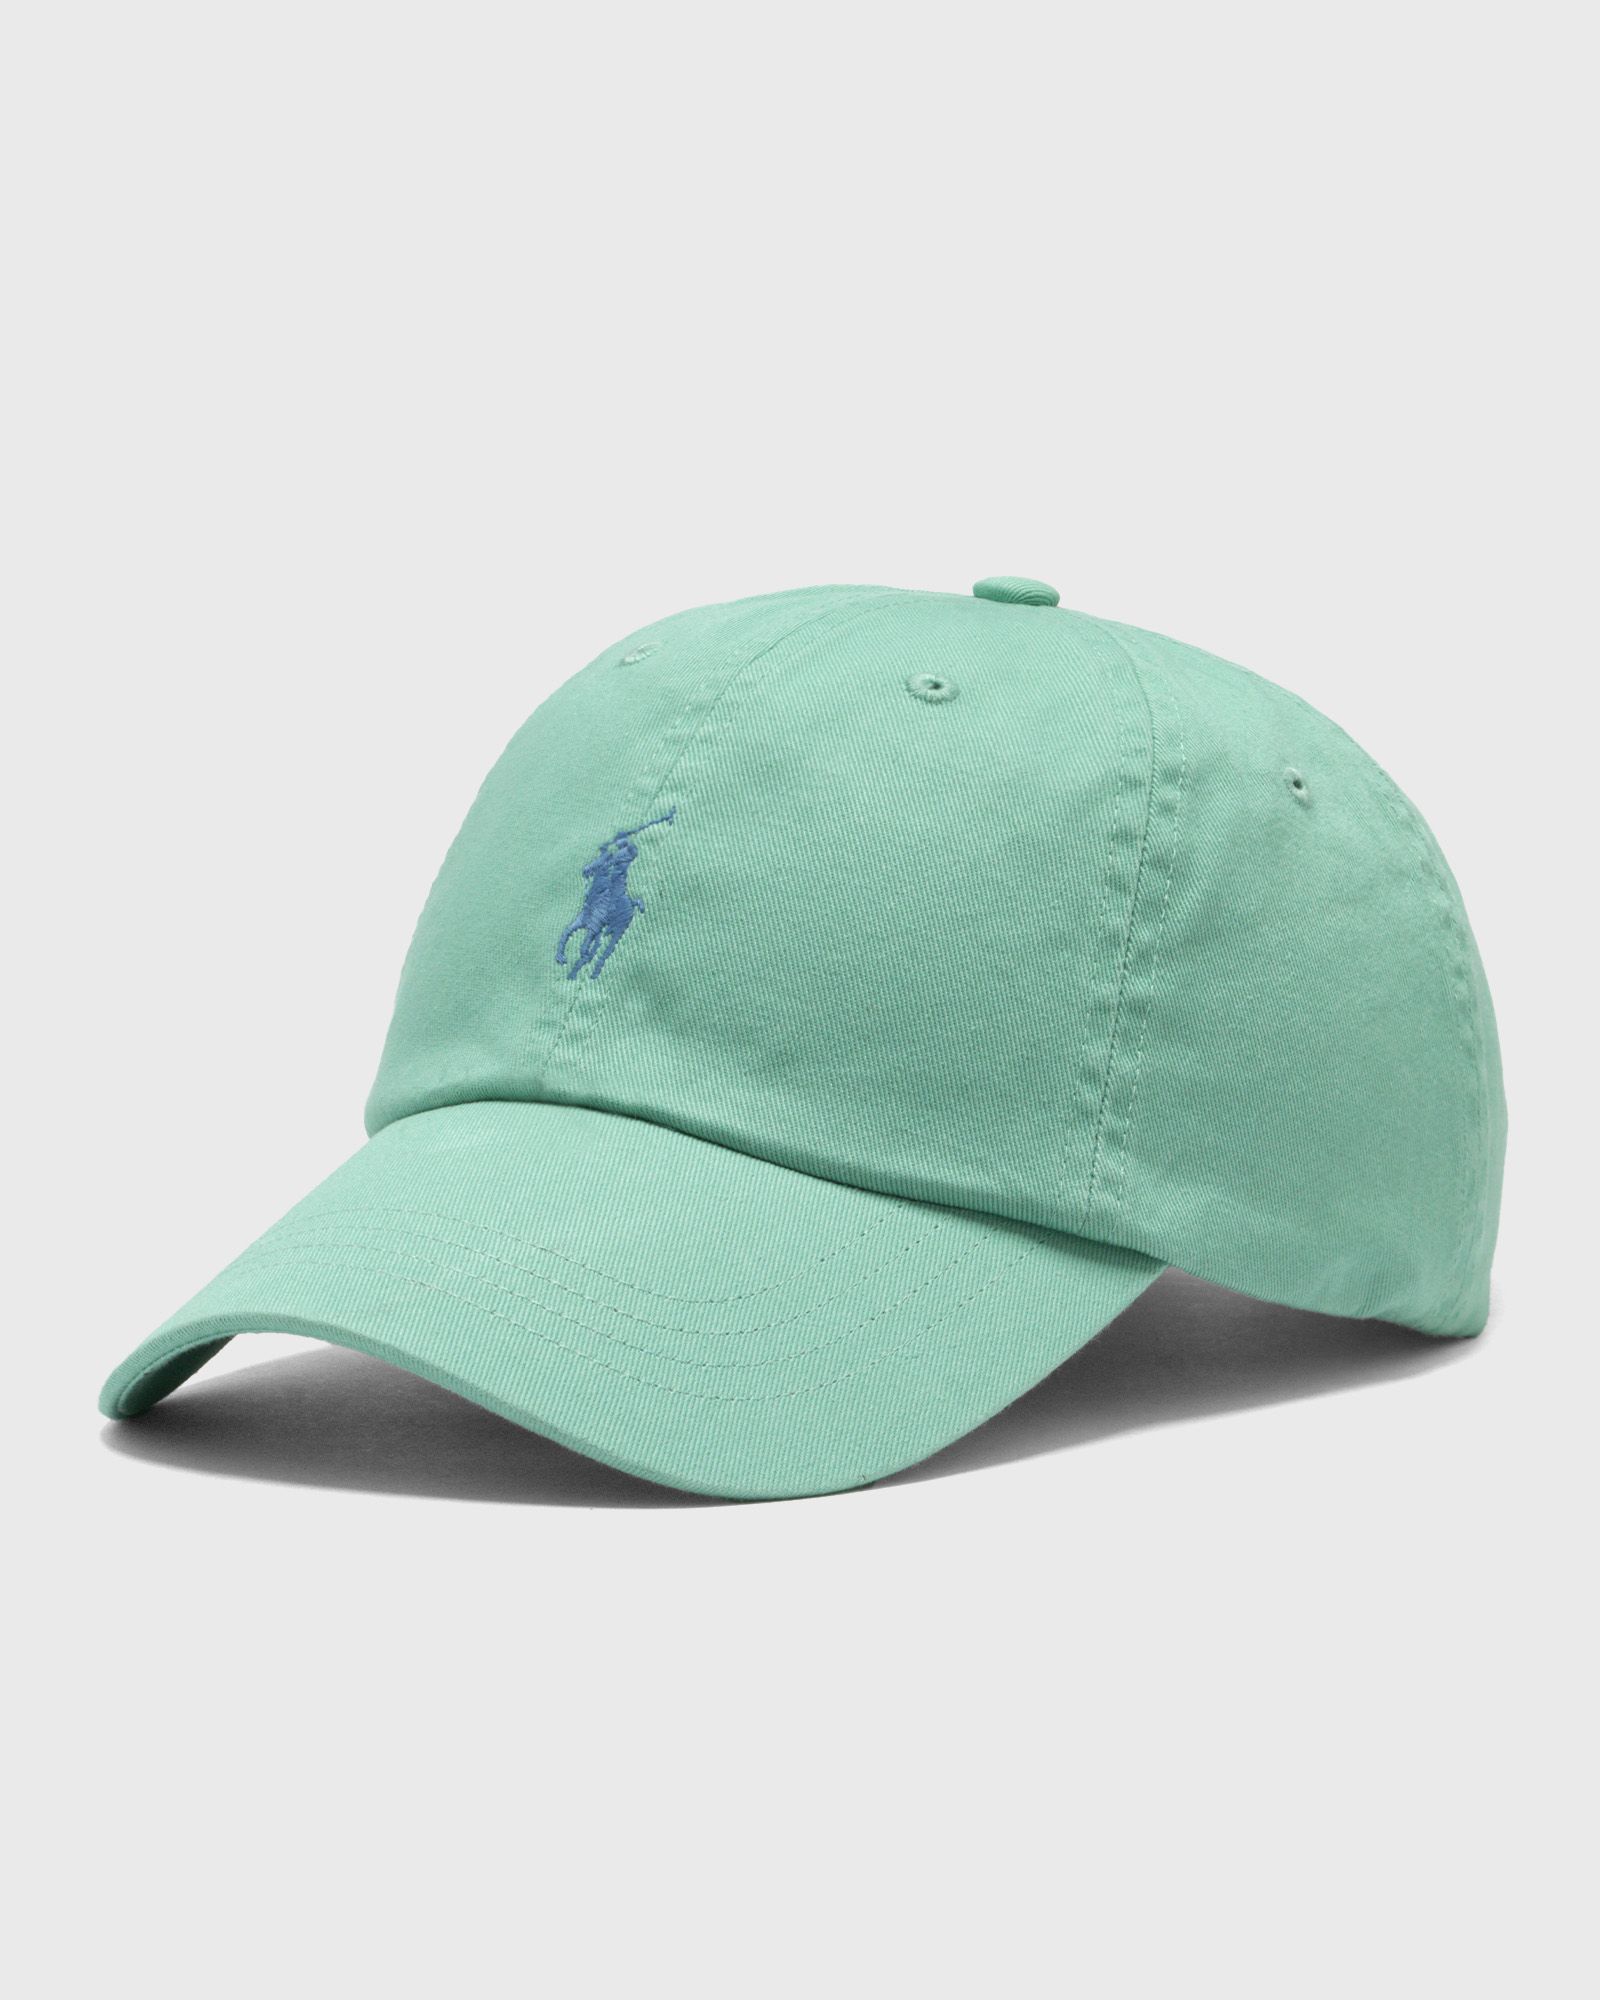 Polo Ralph Lauren - cls sprt cap-hat men caps green in größe:one size